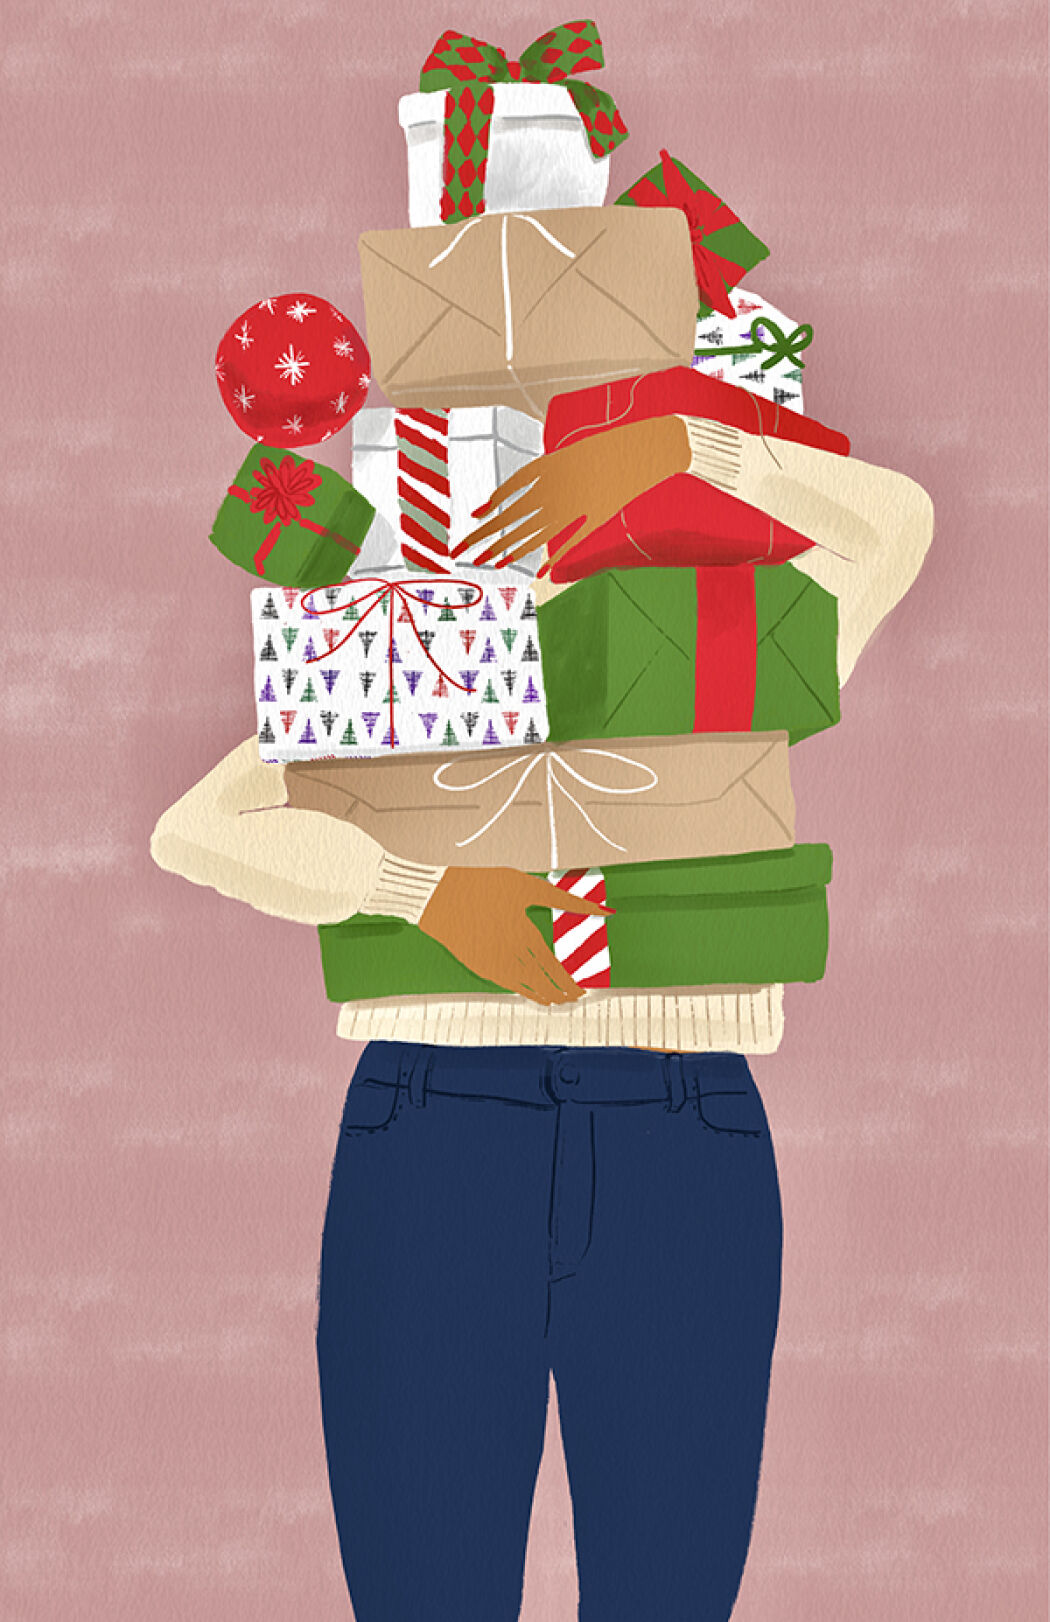 Christmas campaign drawing by Christina Gliha